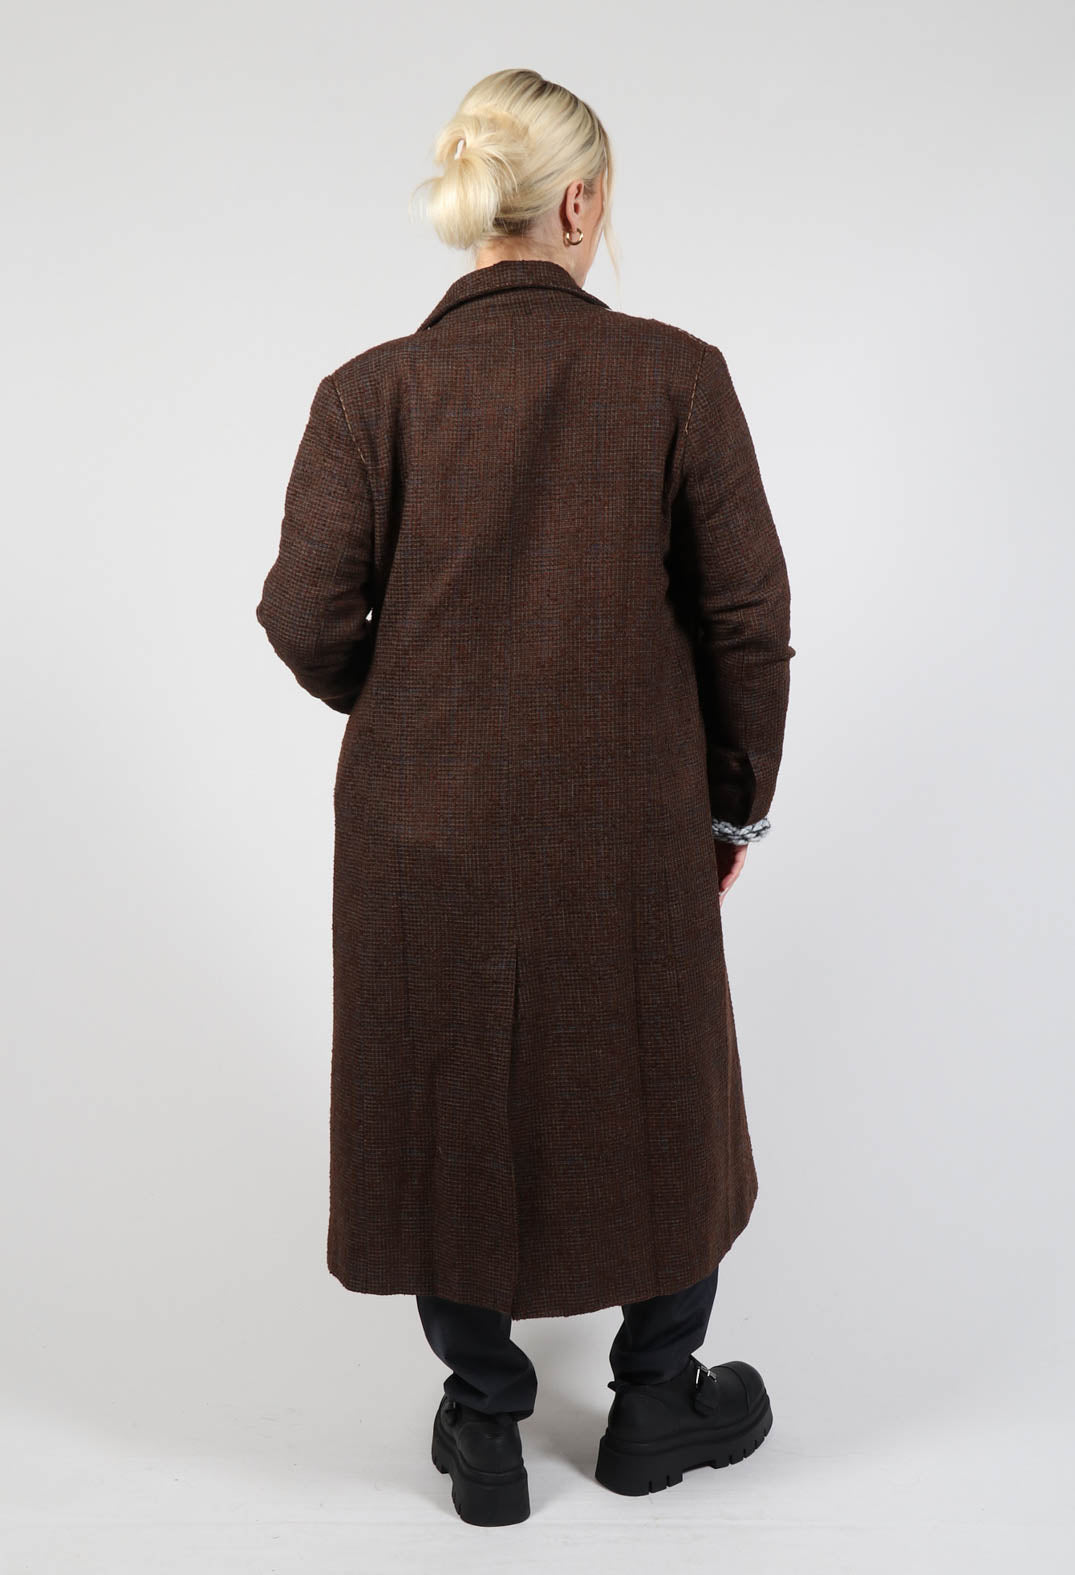 Evening Coat in Original Brown Minature Check